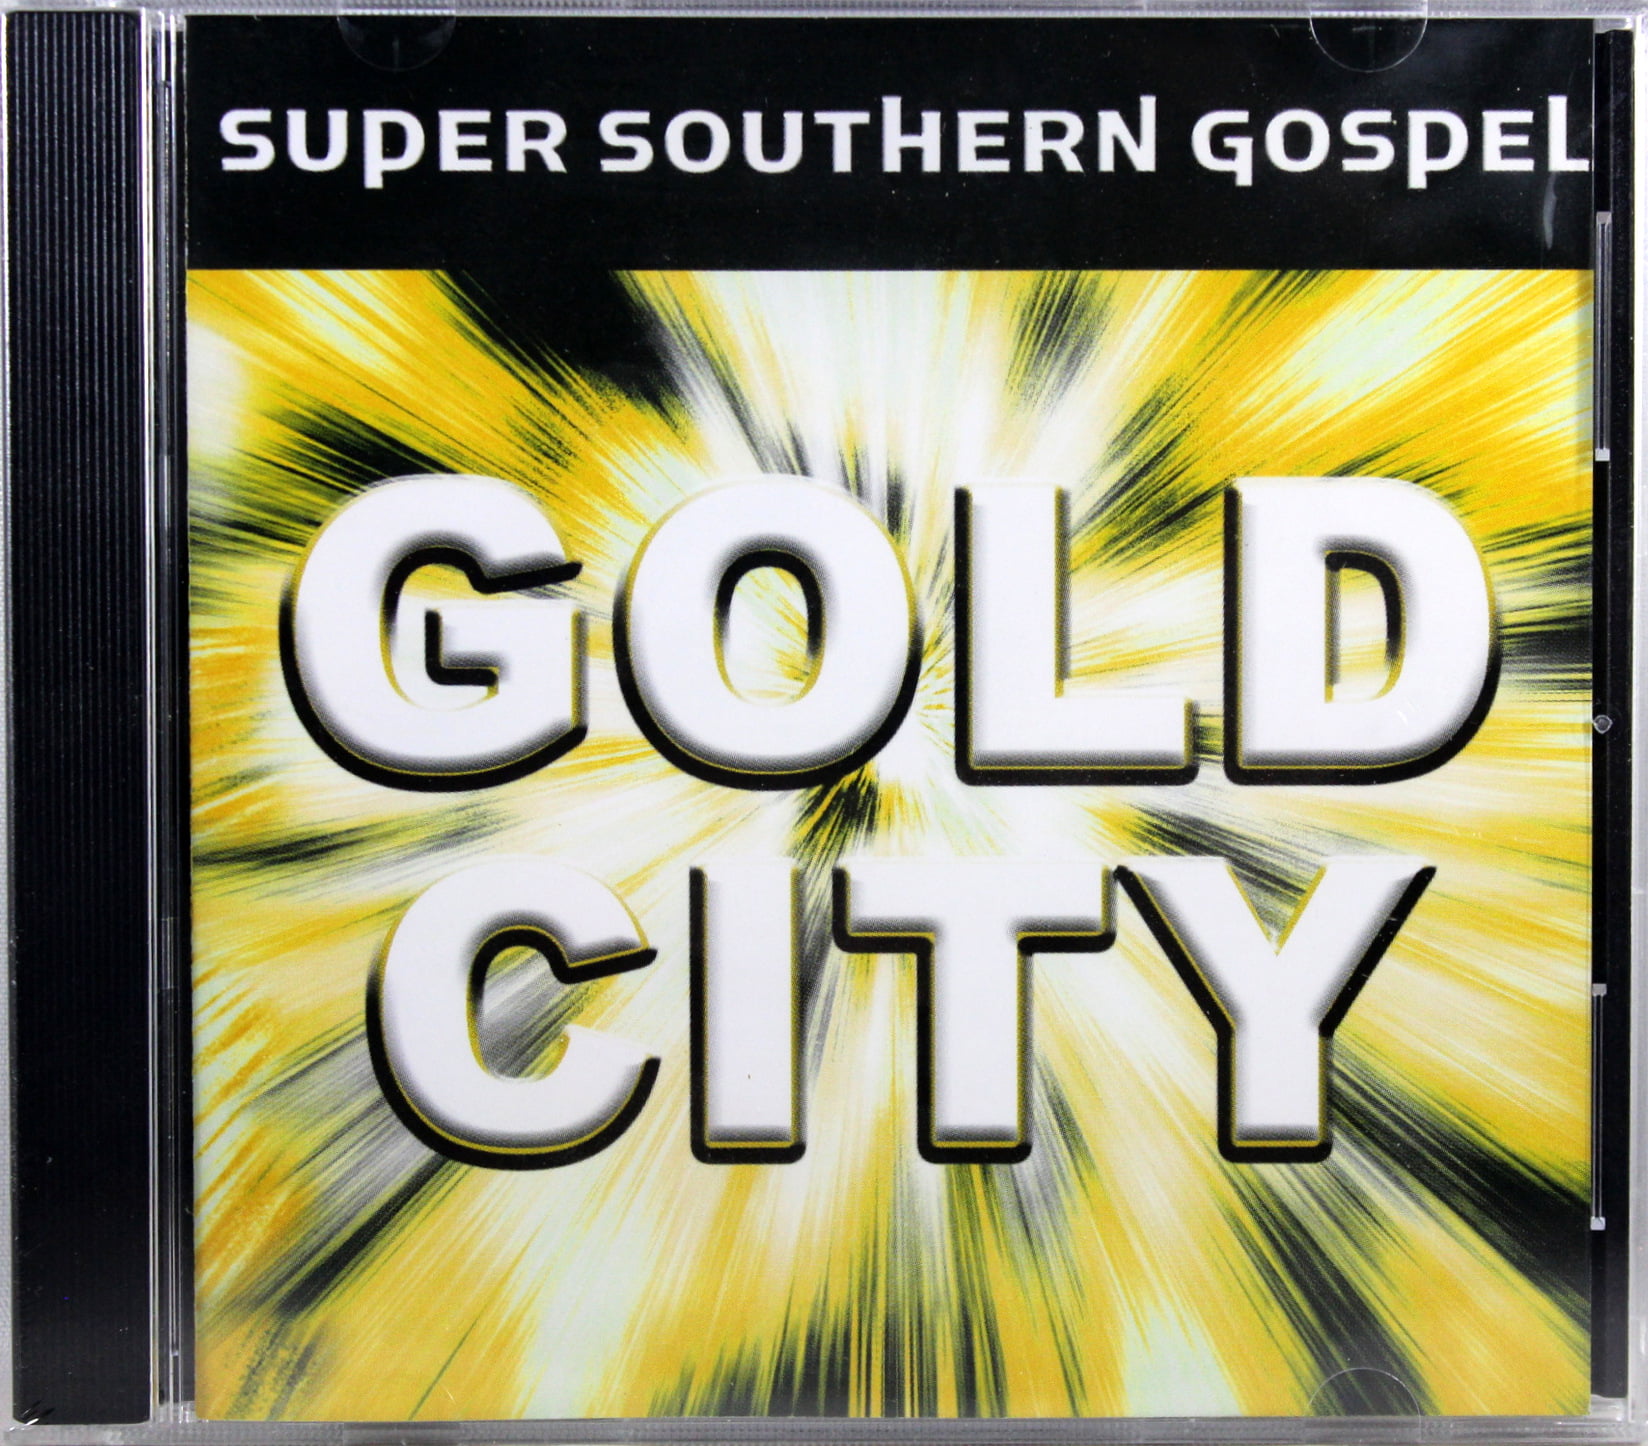 Super Southern Gospel:Gold City 